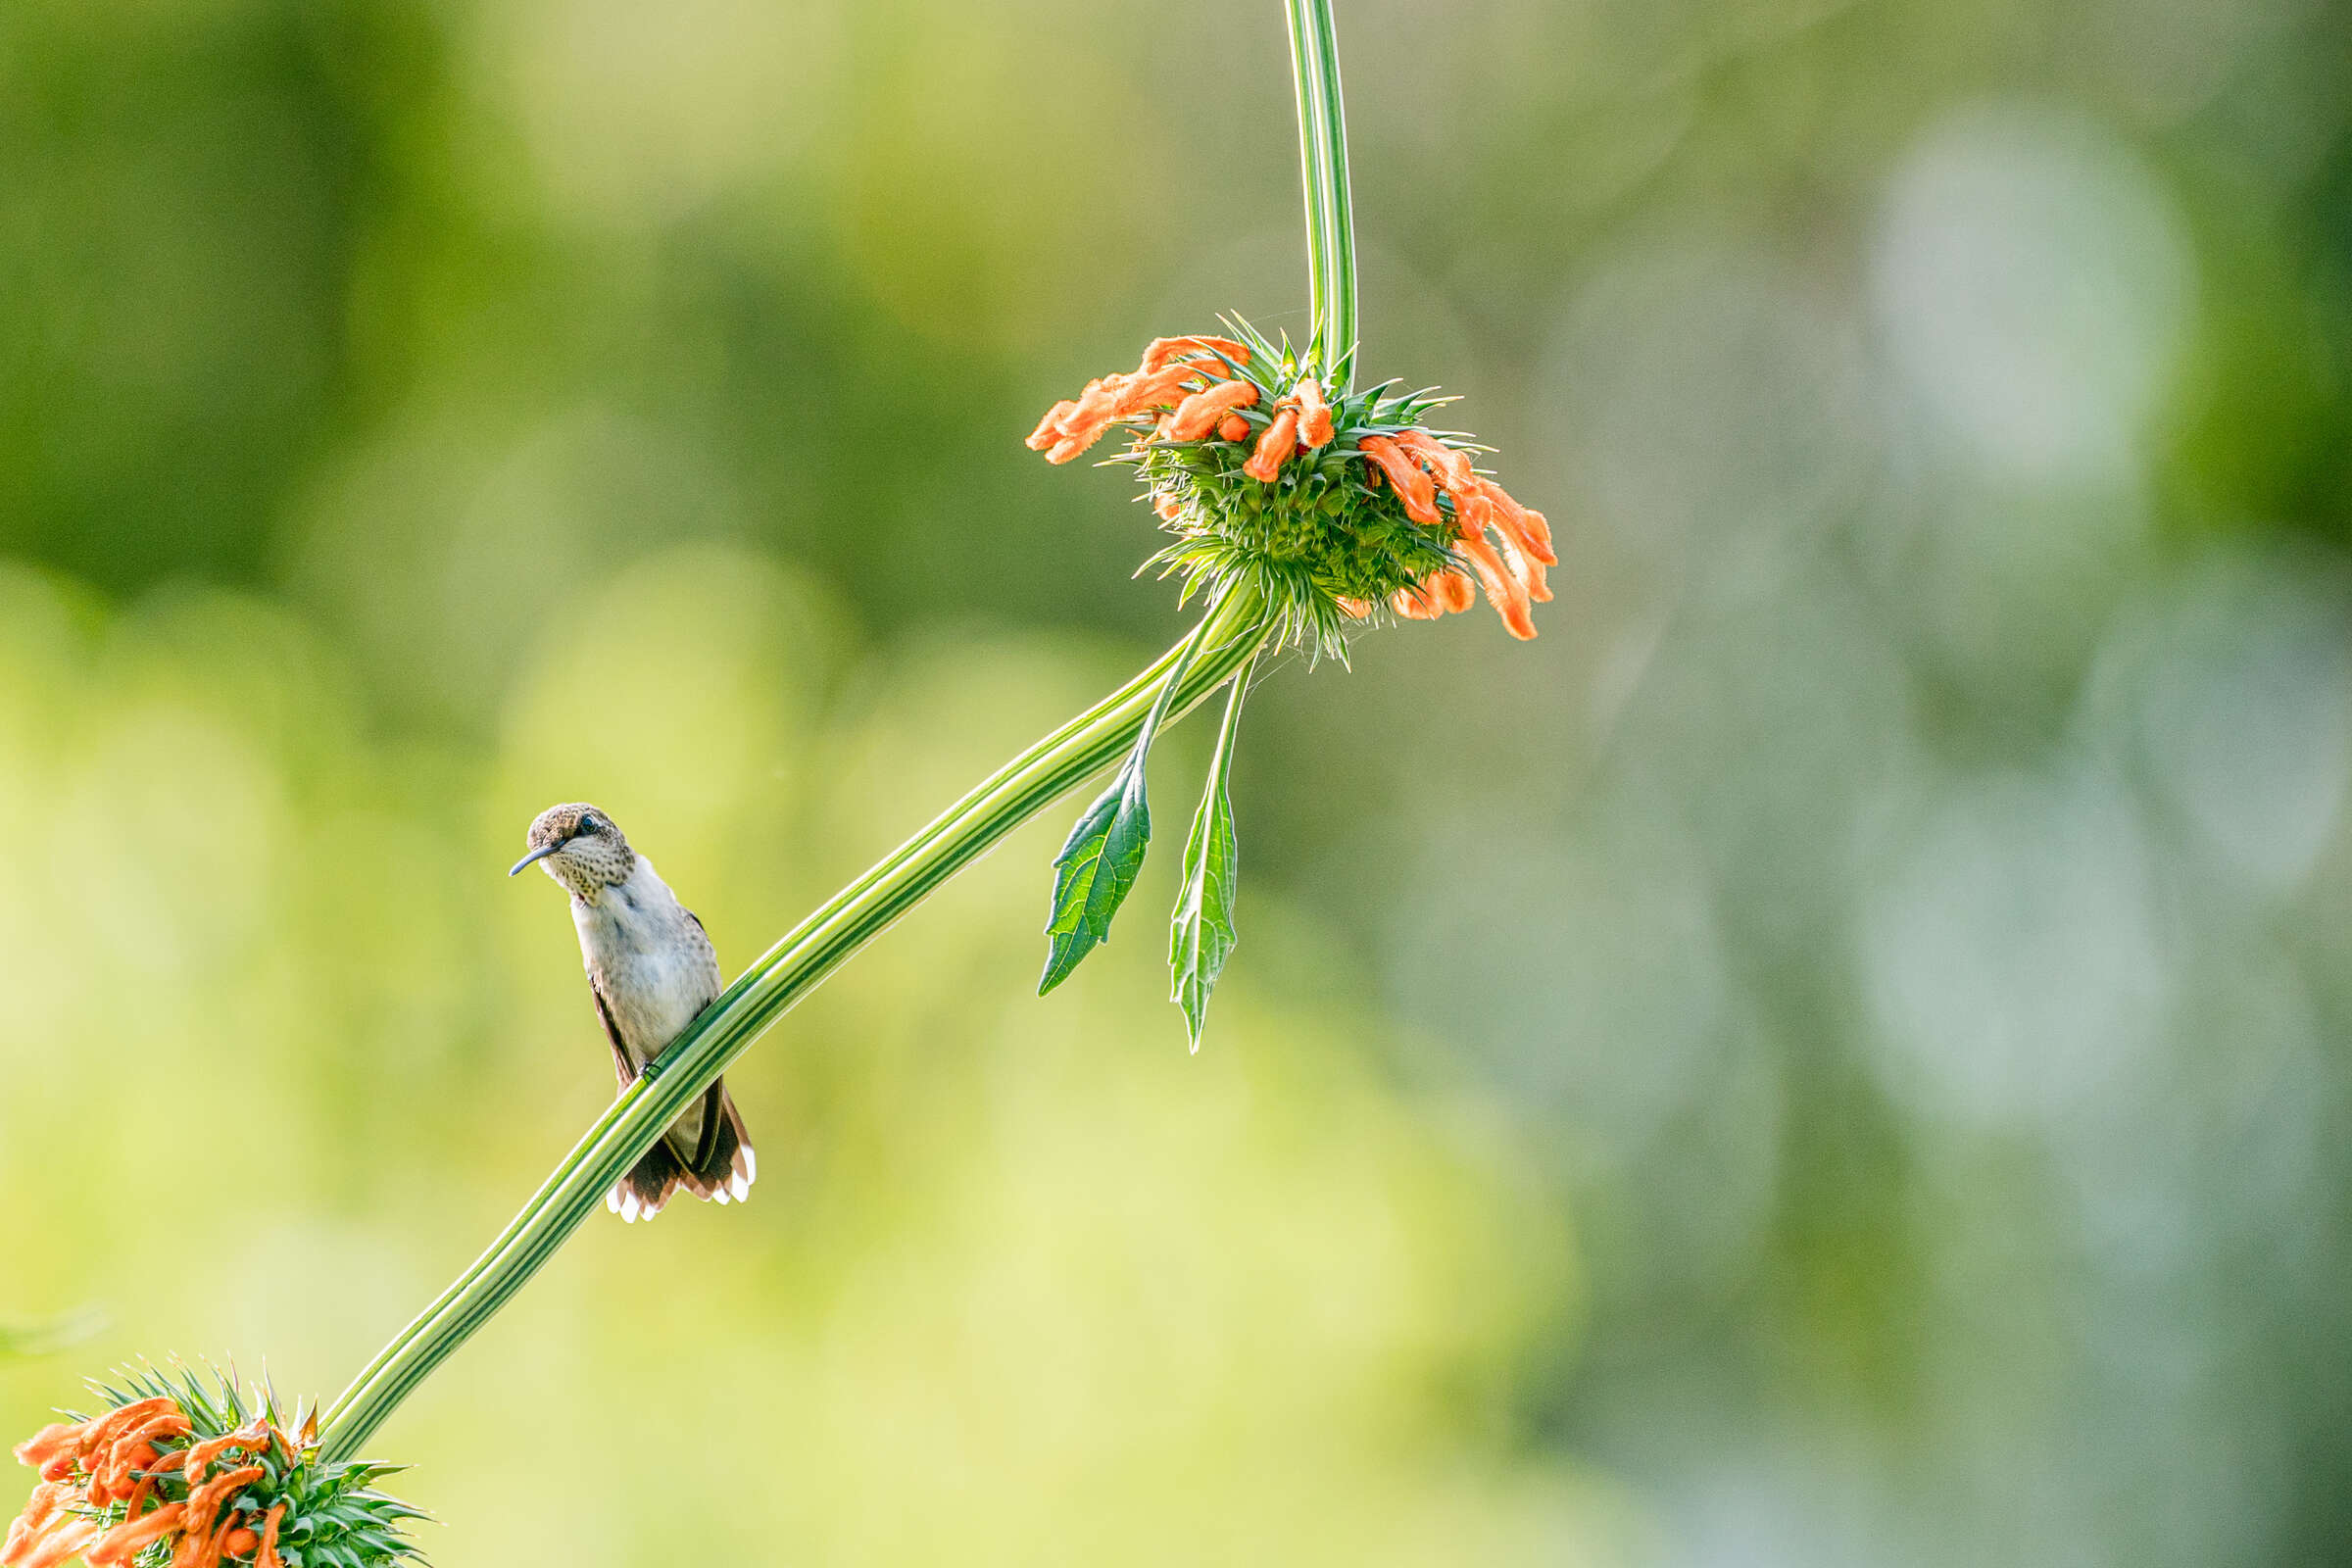 A lone hummingbird perches on a flower stem, just below orange blooms